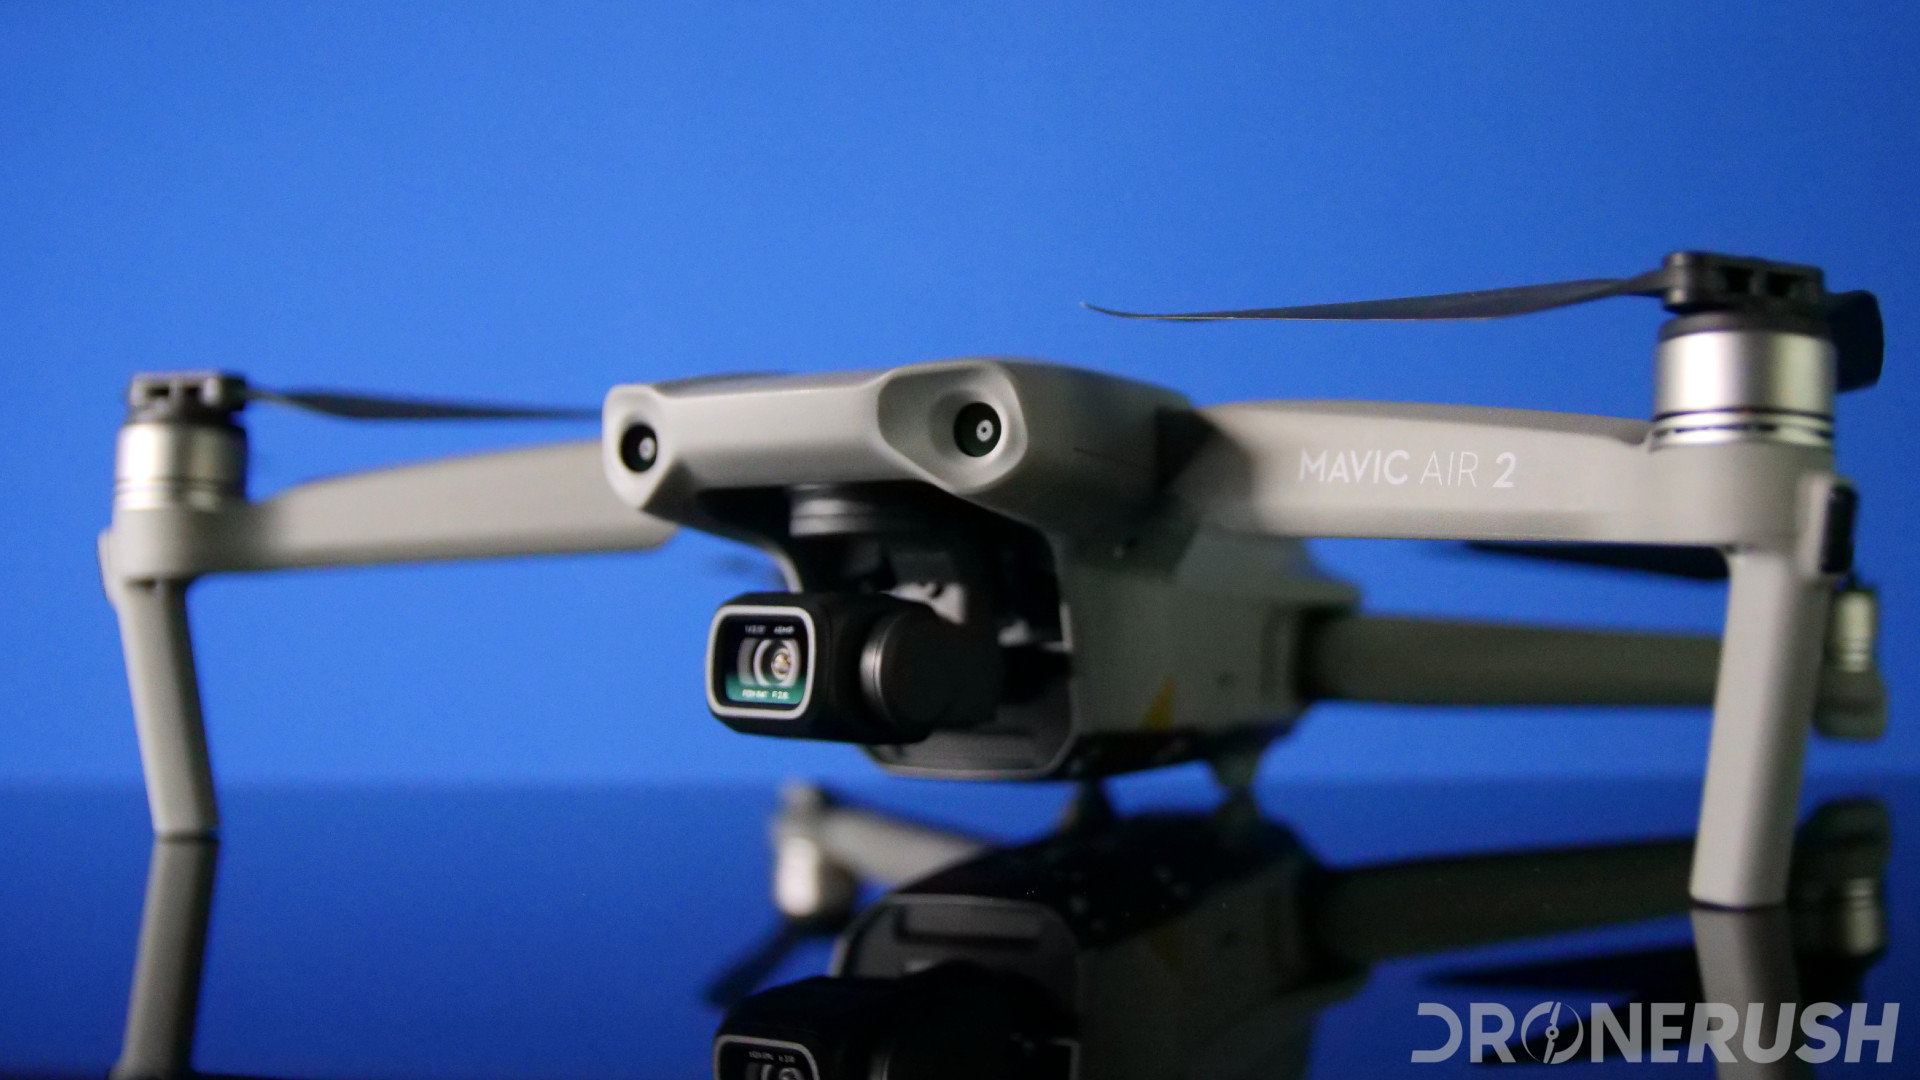 Corporation Offer Fleeting DJI Mavic Air 2 review - Hard to beat - Drone Rush